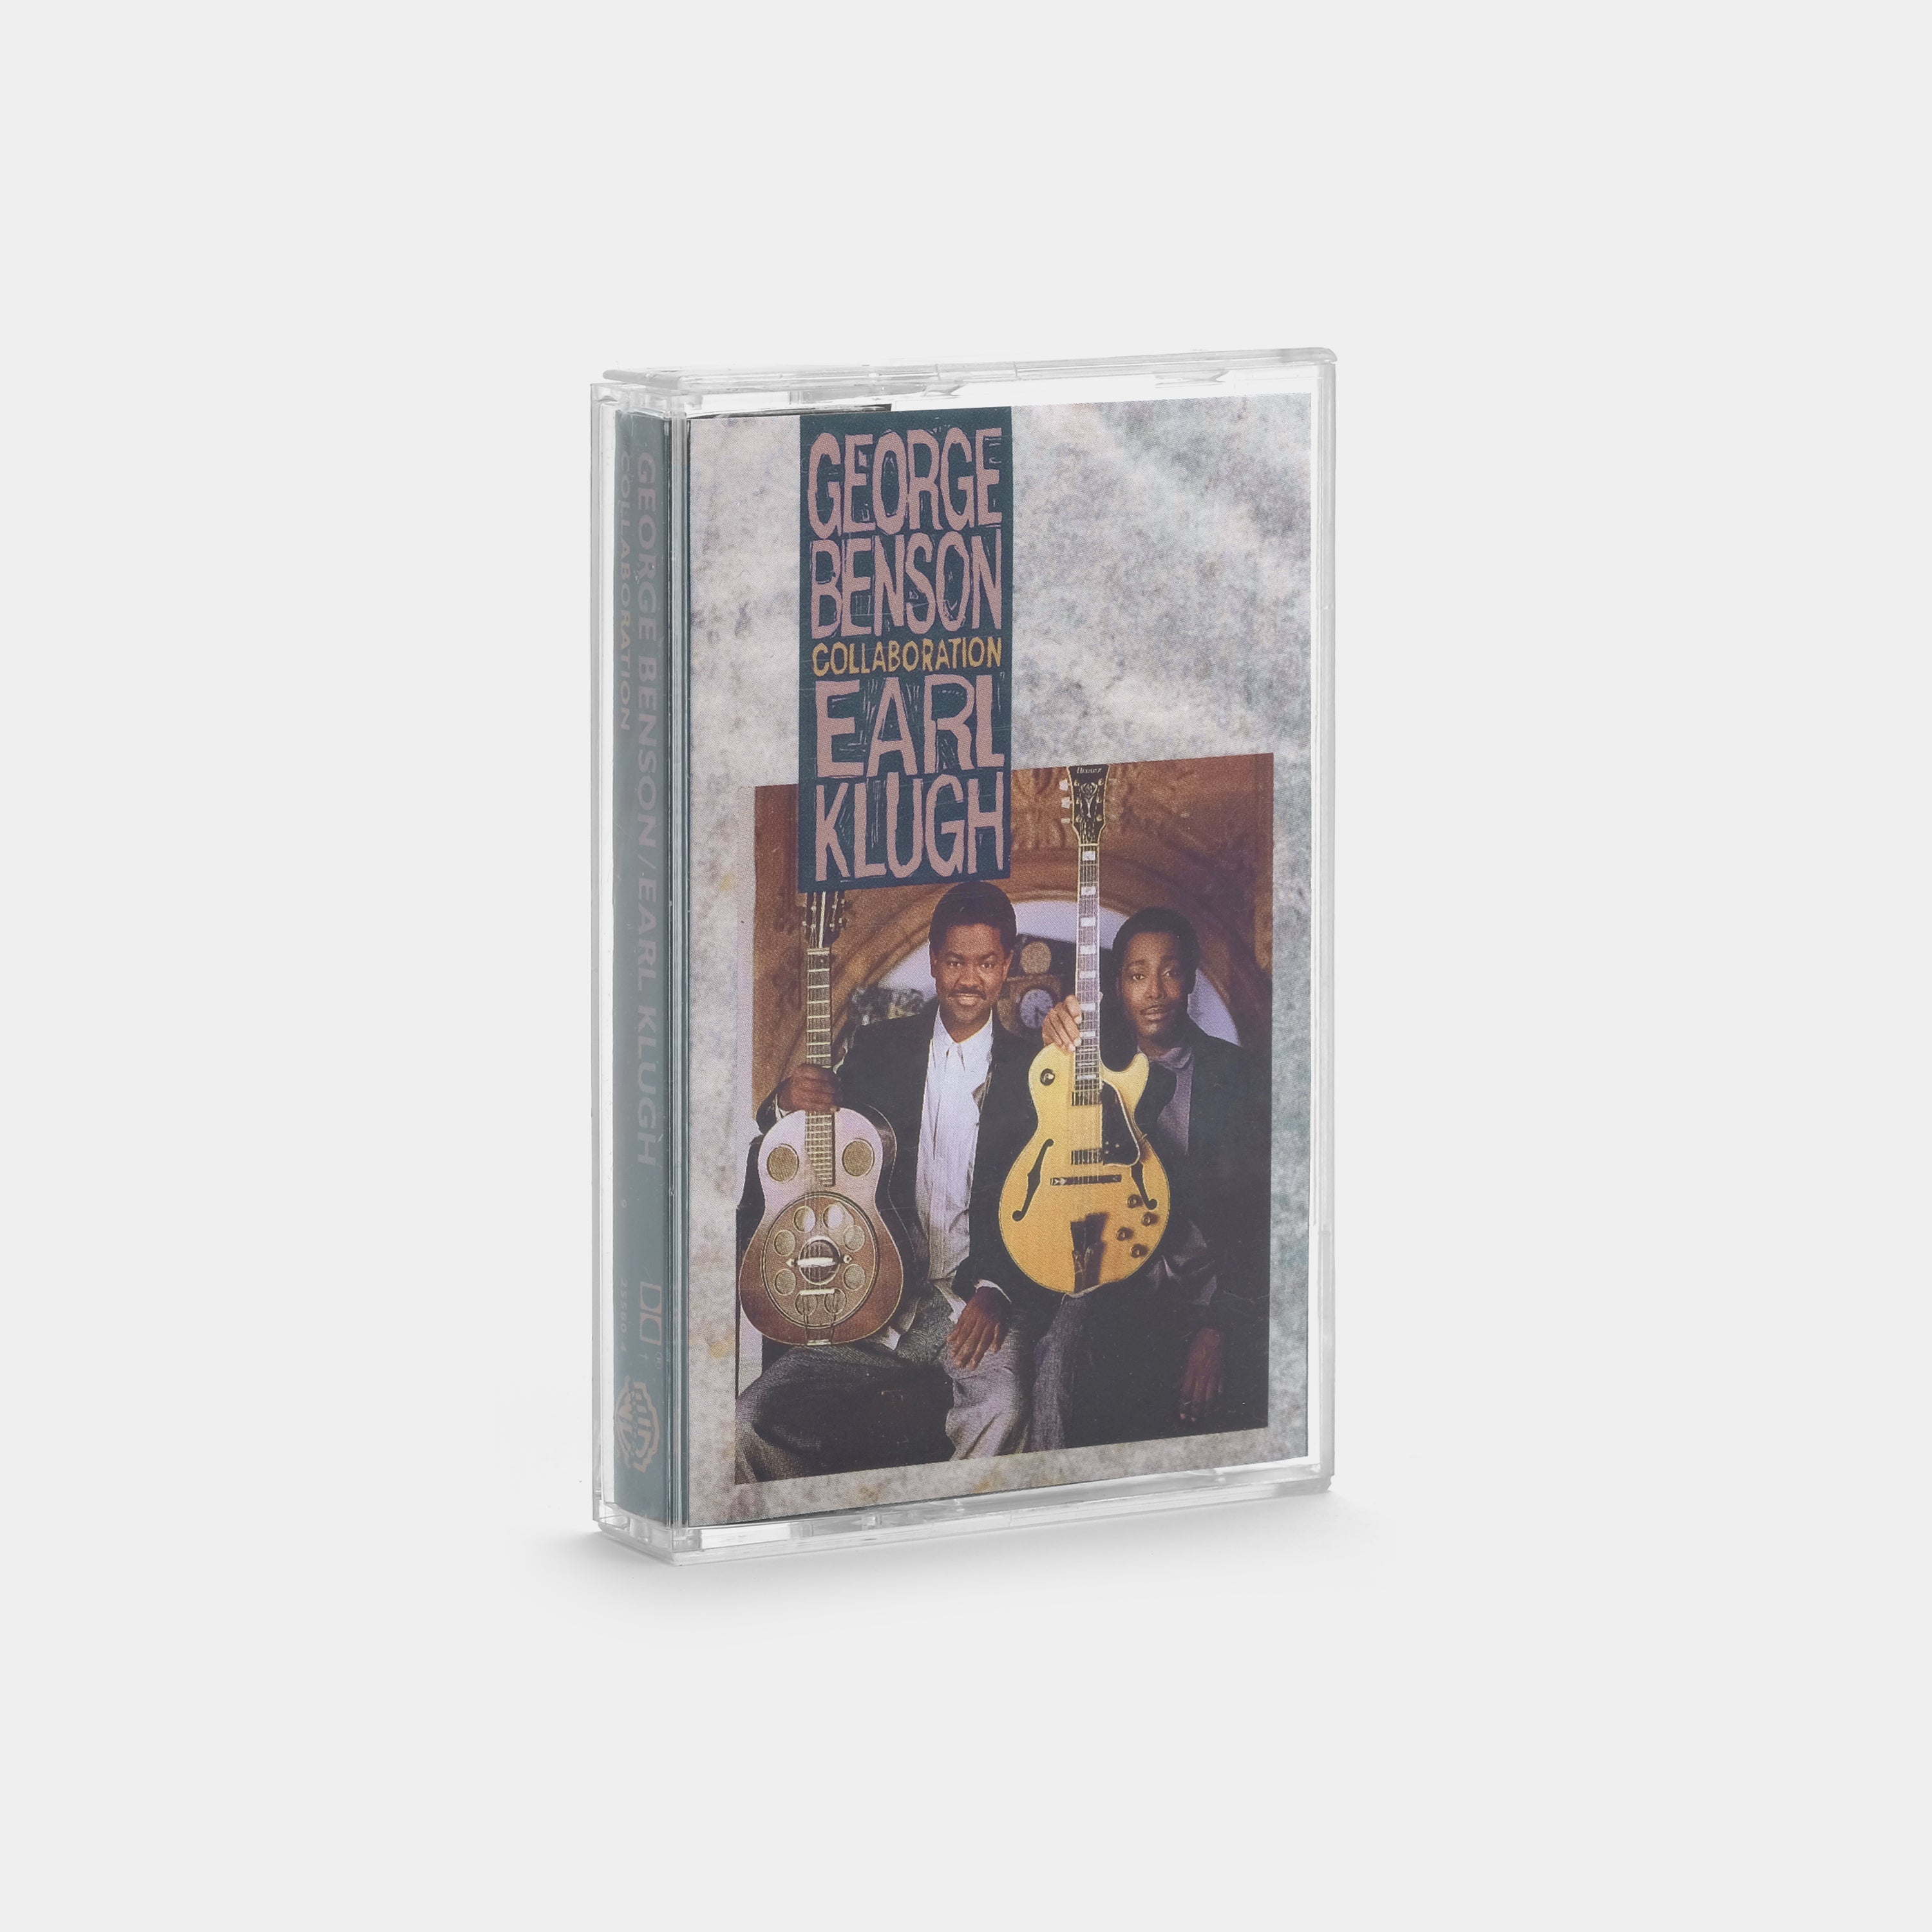 George Benson & Earl Klugh - Collaboration Cassette Tape